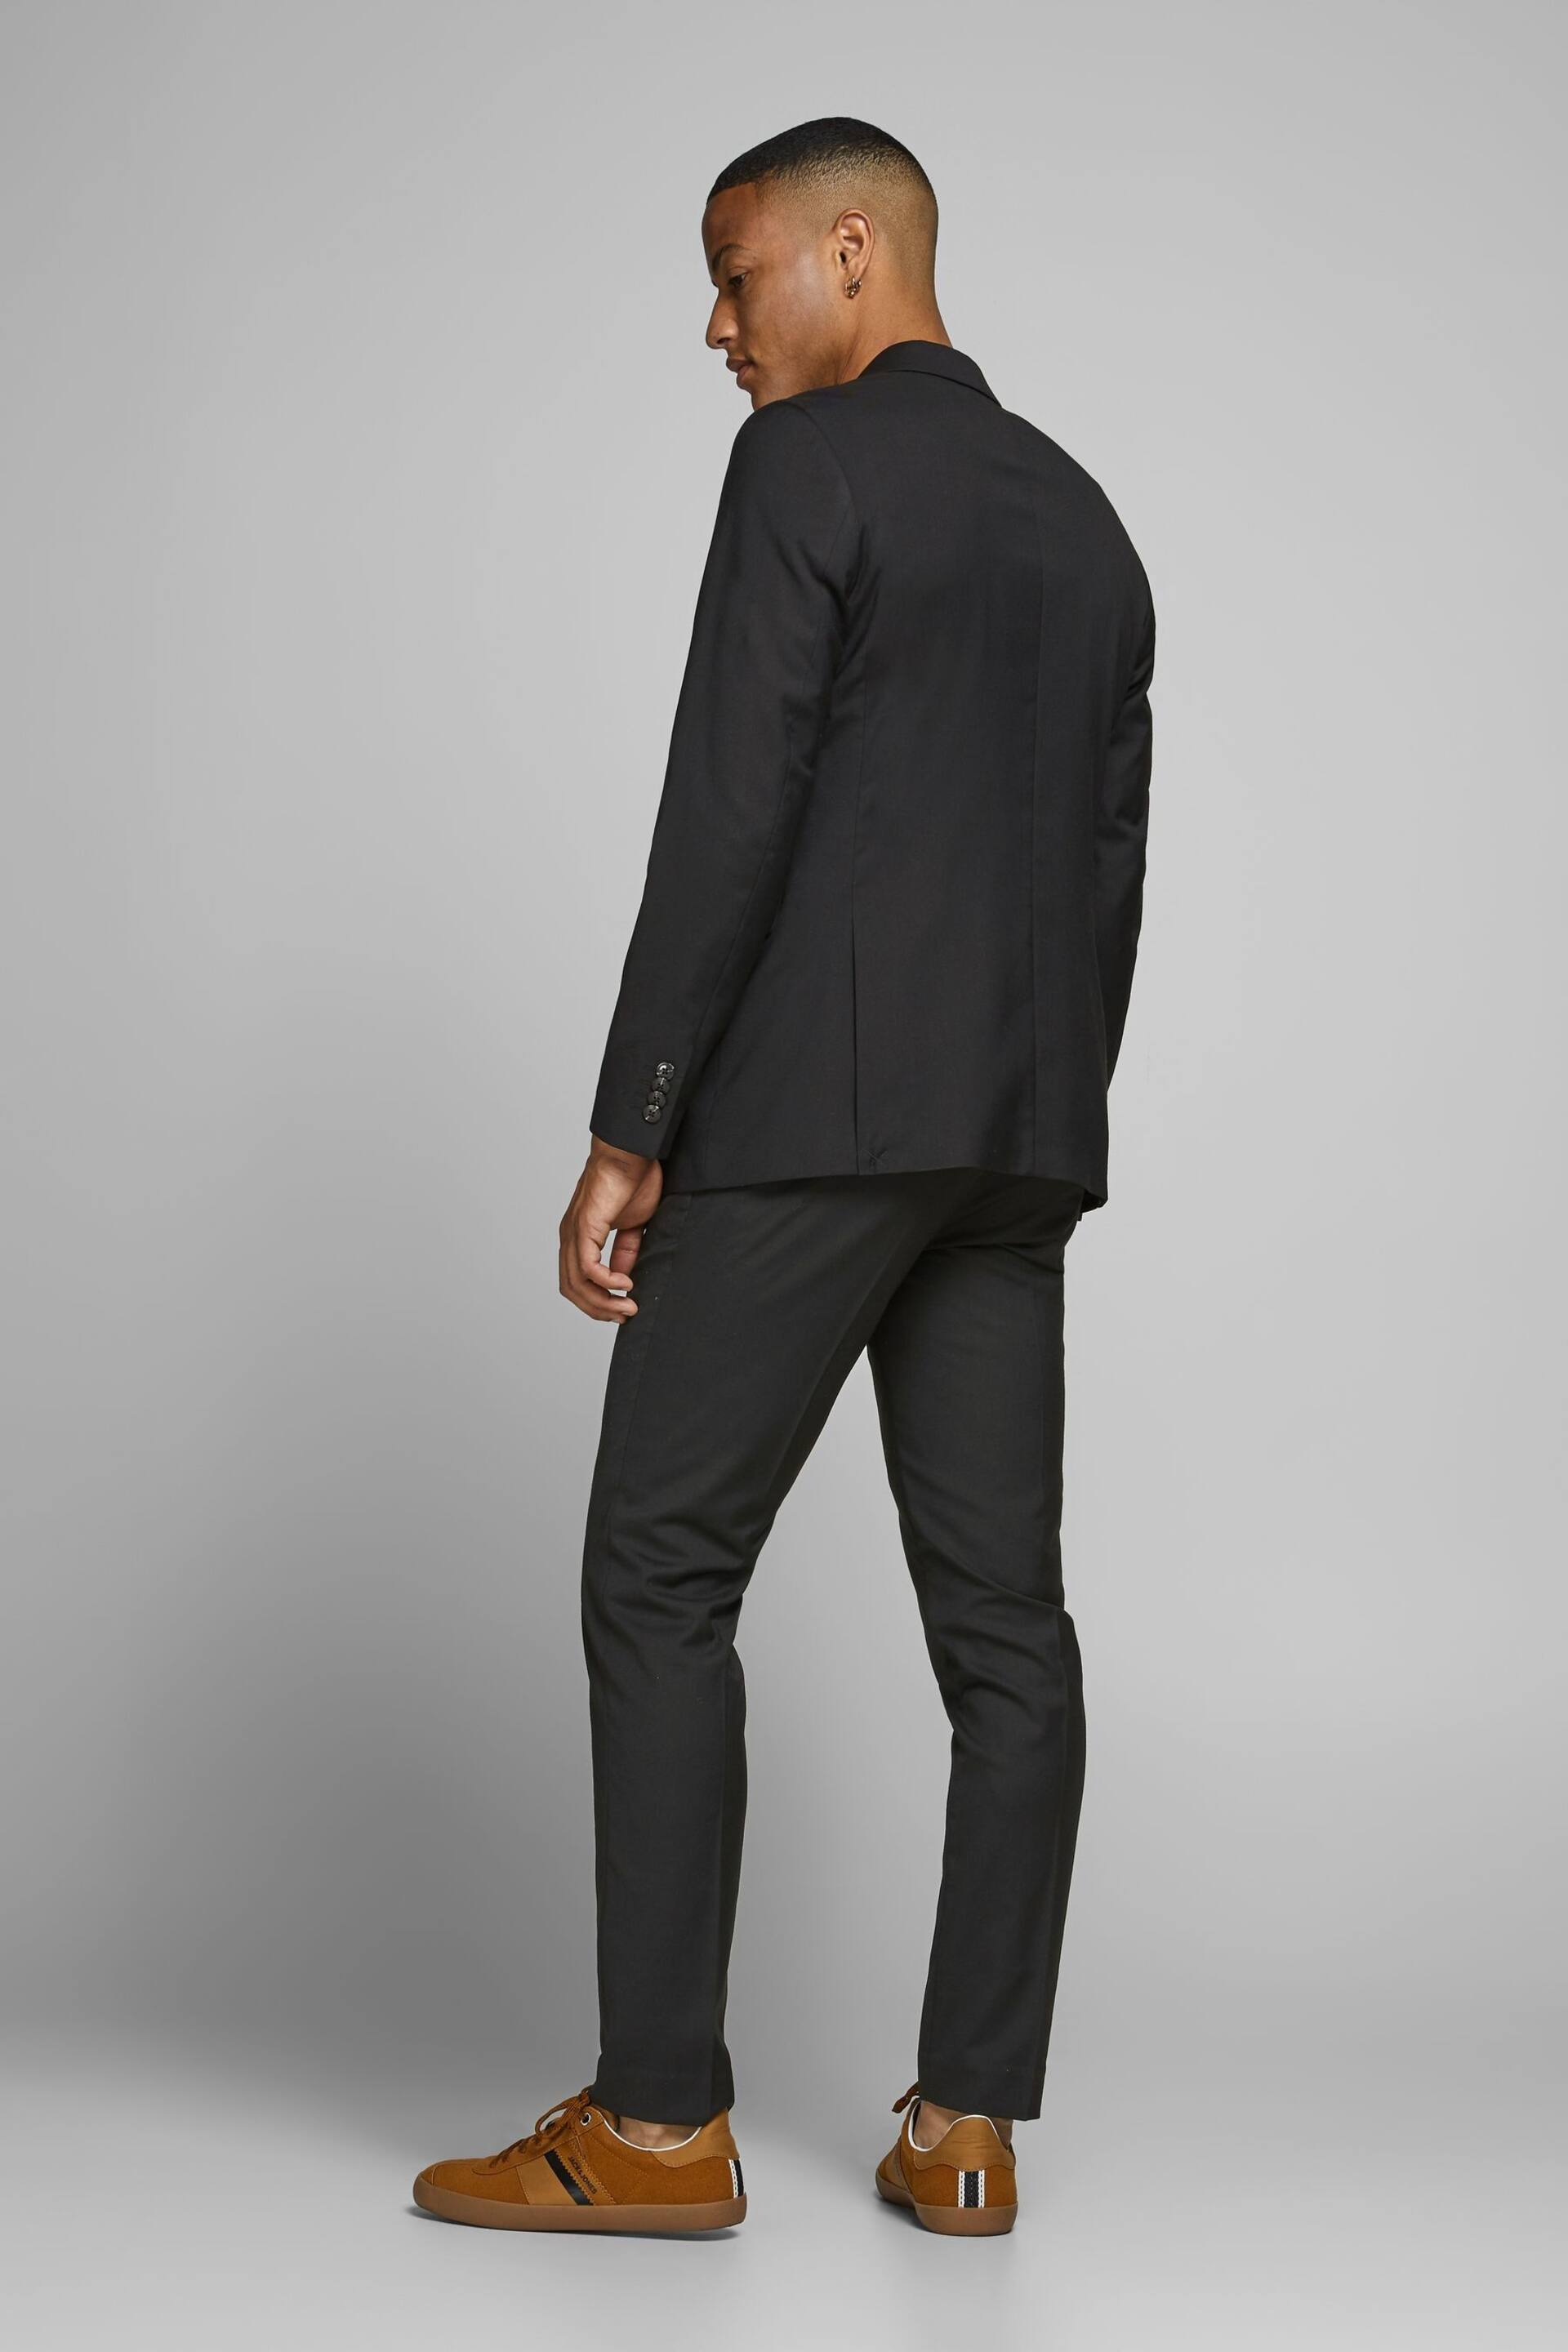 JACK & JONES Black Slim Fit One Button Suit Blazer - Image 3 of 4